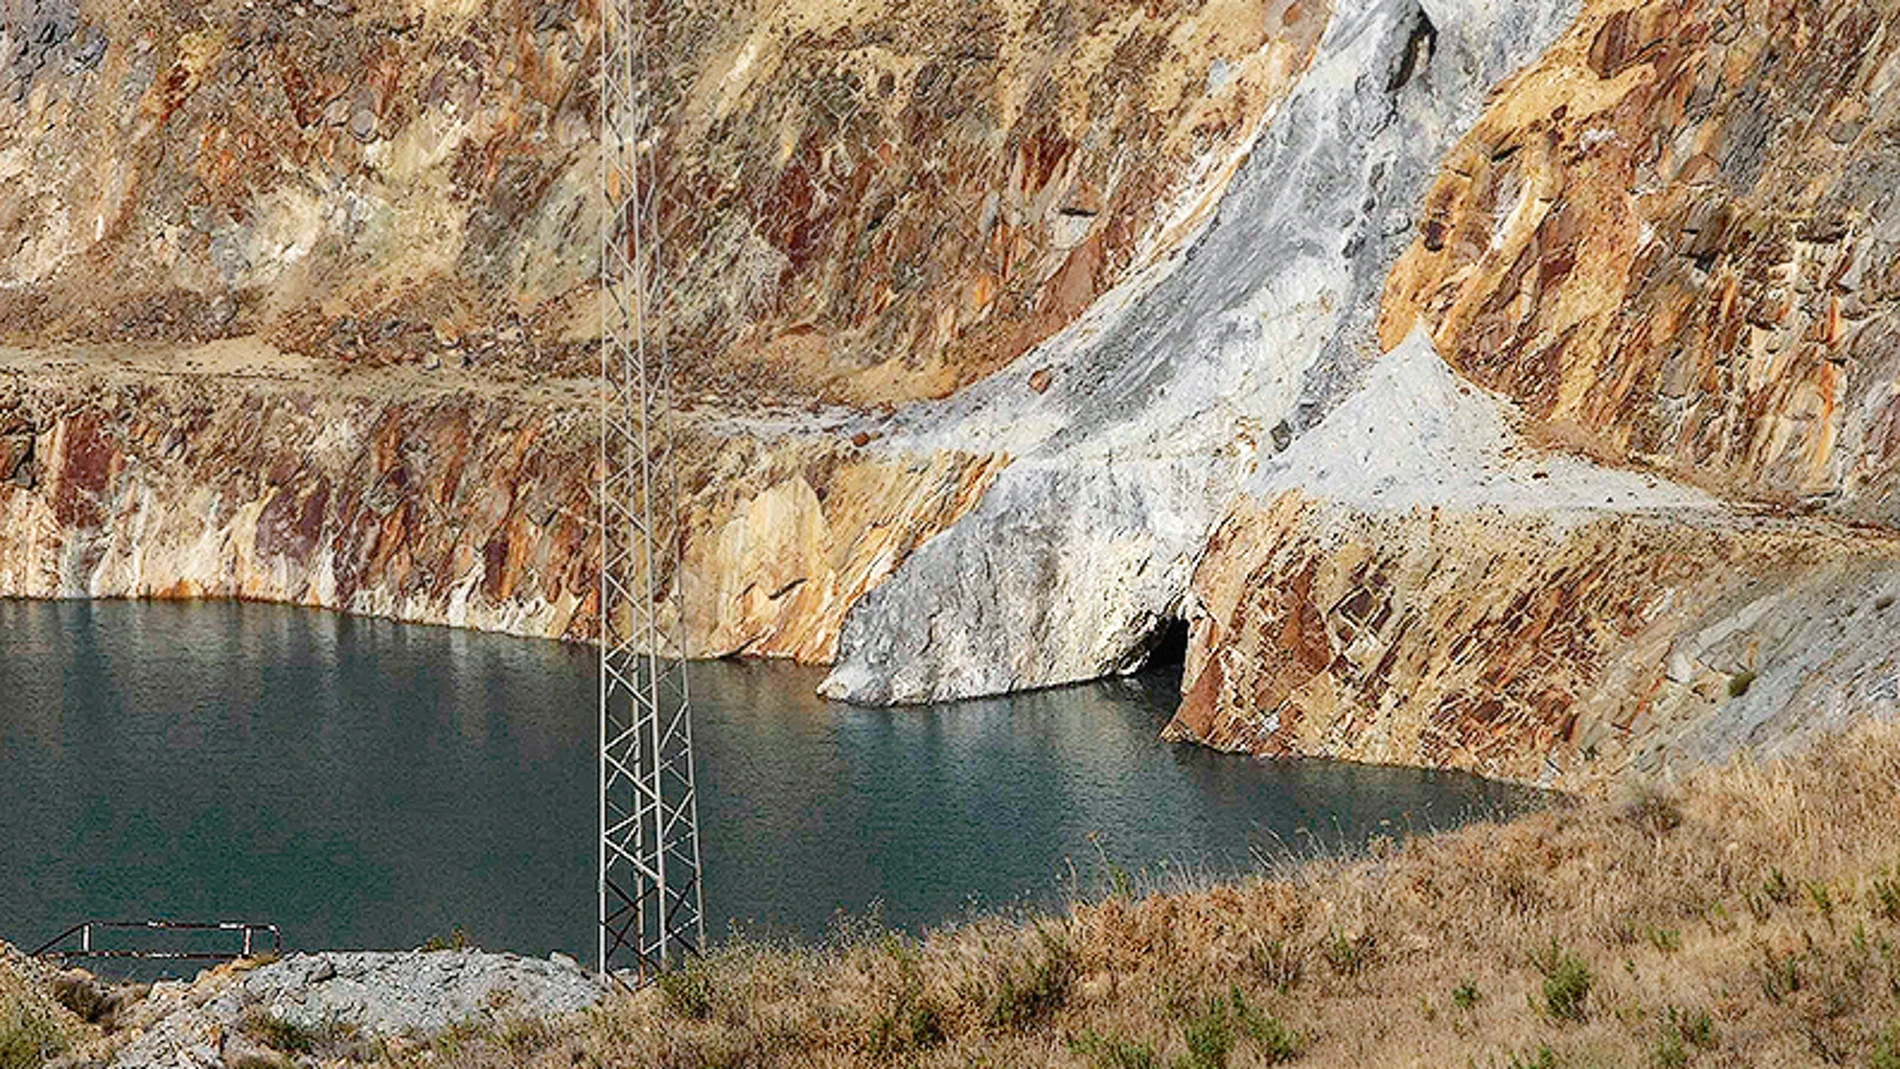 De la reapertura de la mina de Aznalcóllar dependen más de mil empleos